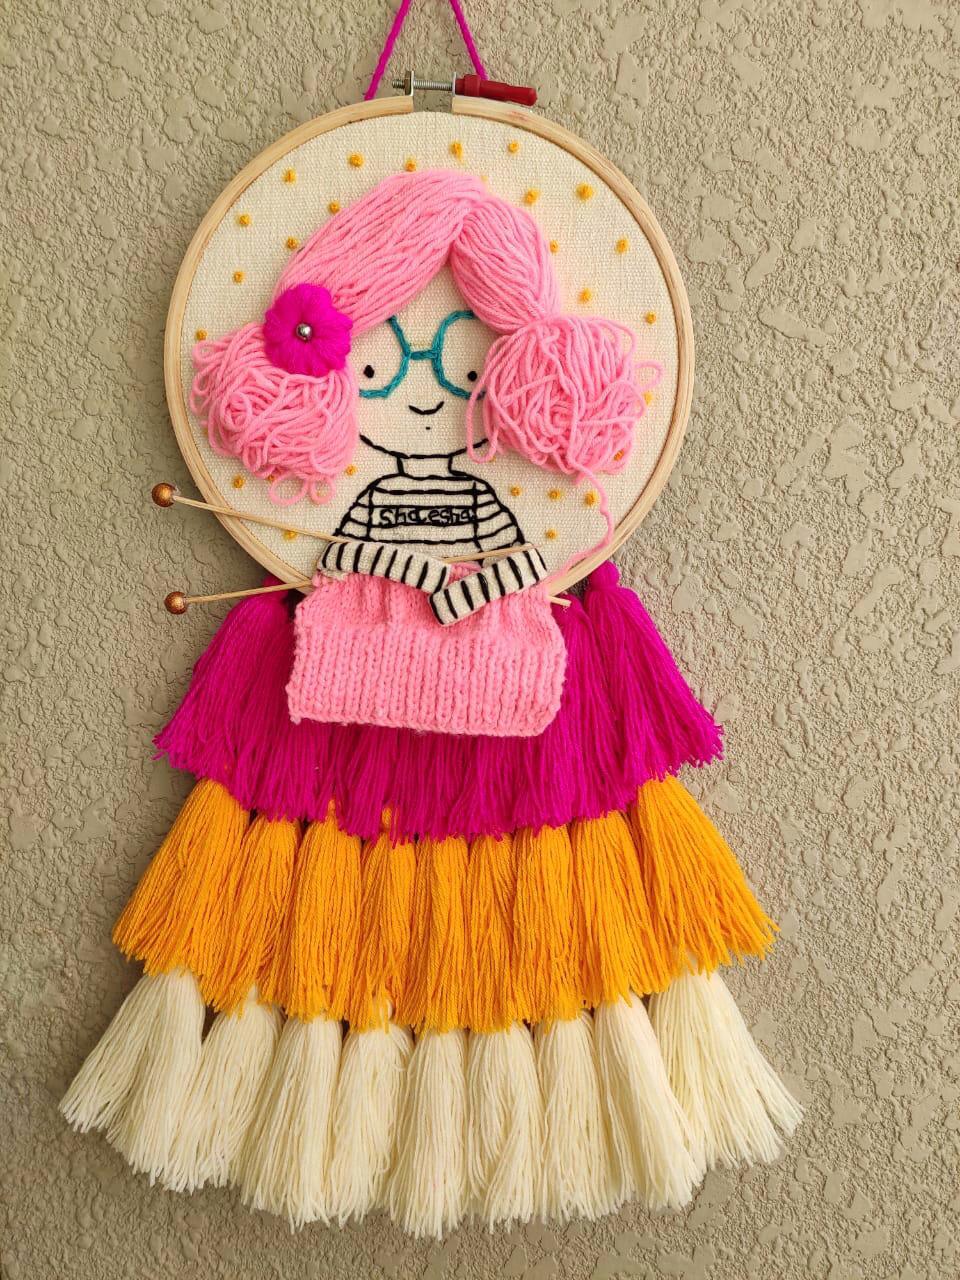 Pink Haired Girl Knitting Dreamcatcher